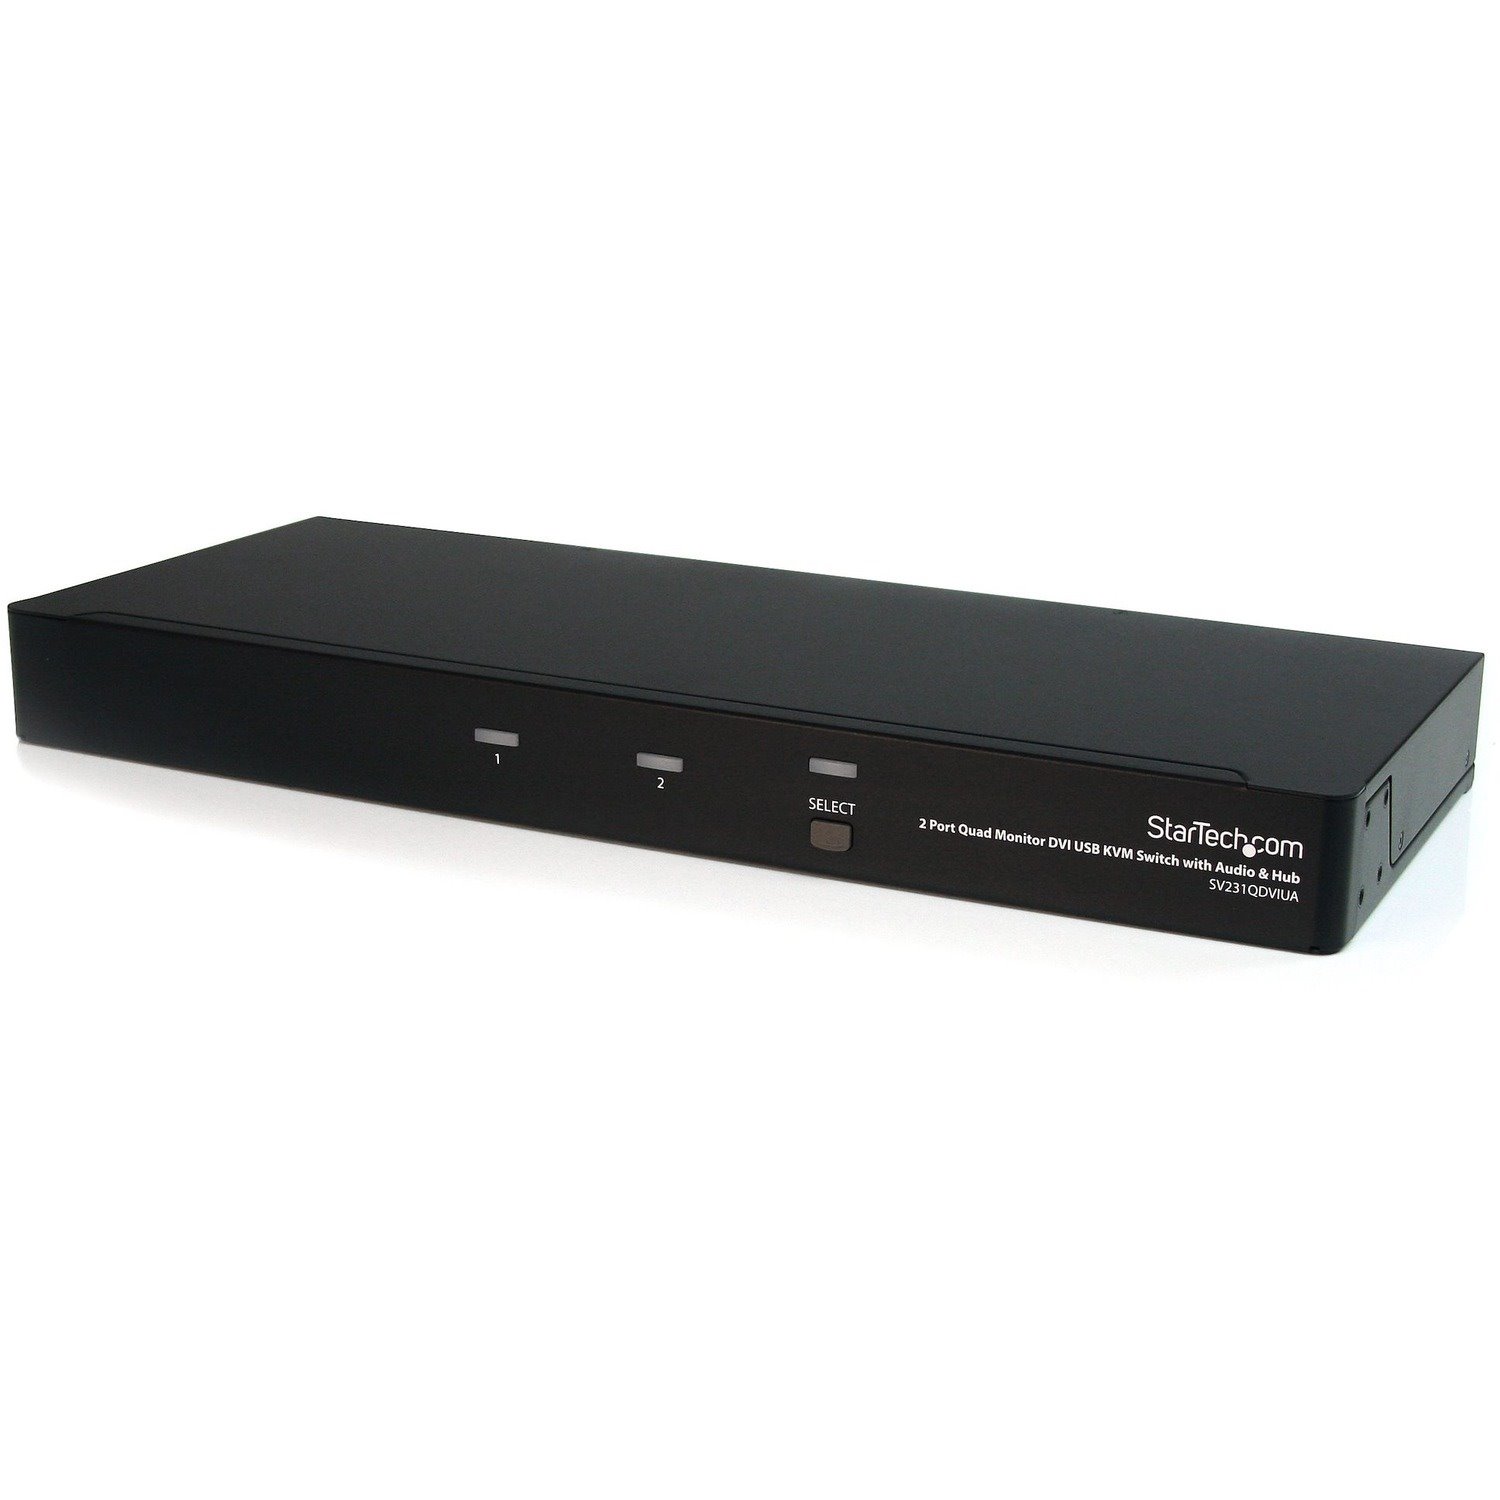 StarTech.com 2-Port Quad Monitor Dual-Link DVI USB KVM Switch with Audio & Hub